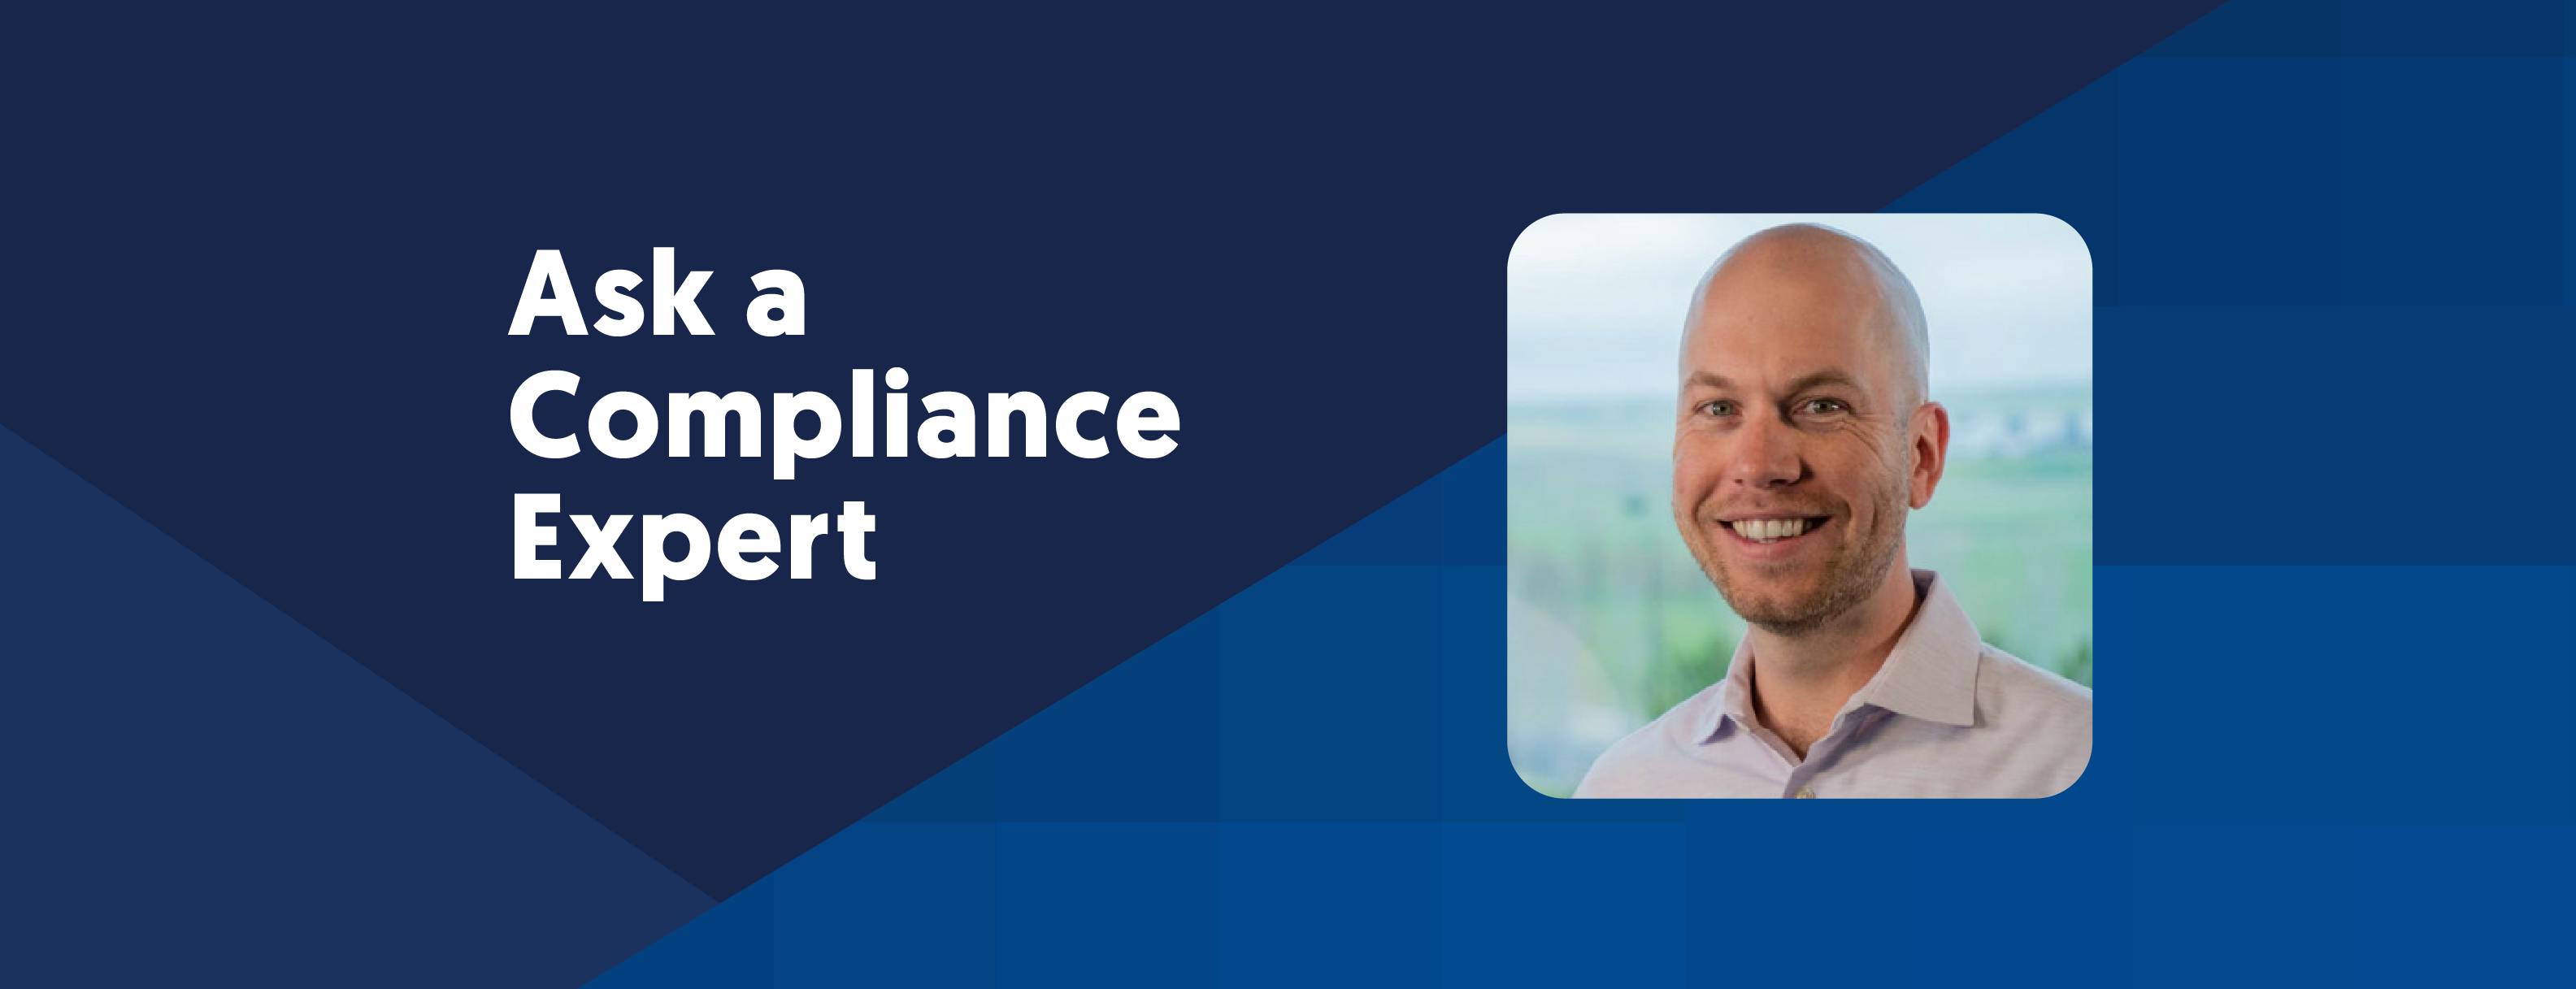 Ask a Compliance Expert: 10 Questions with Jonathan Leach, CISSP, CCSFP, CCSK